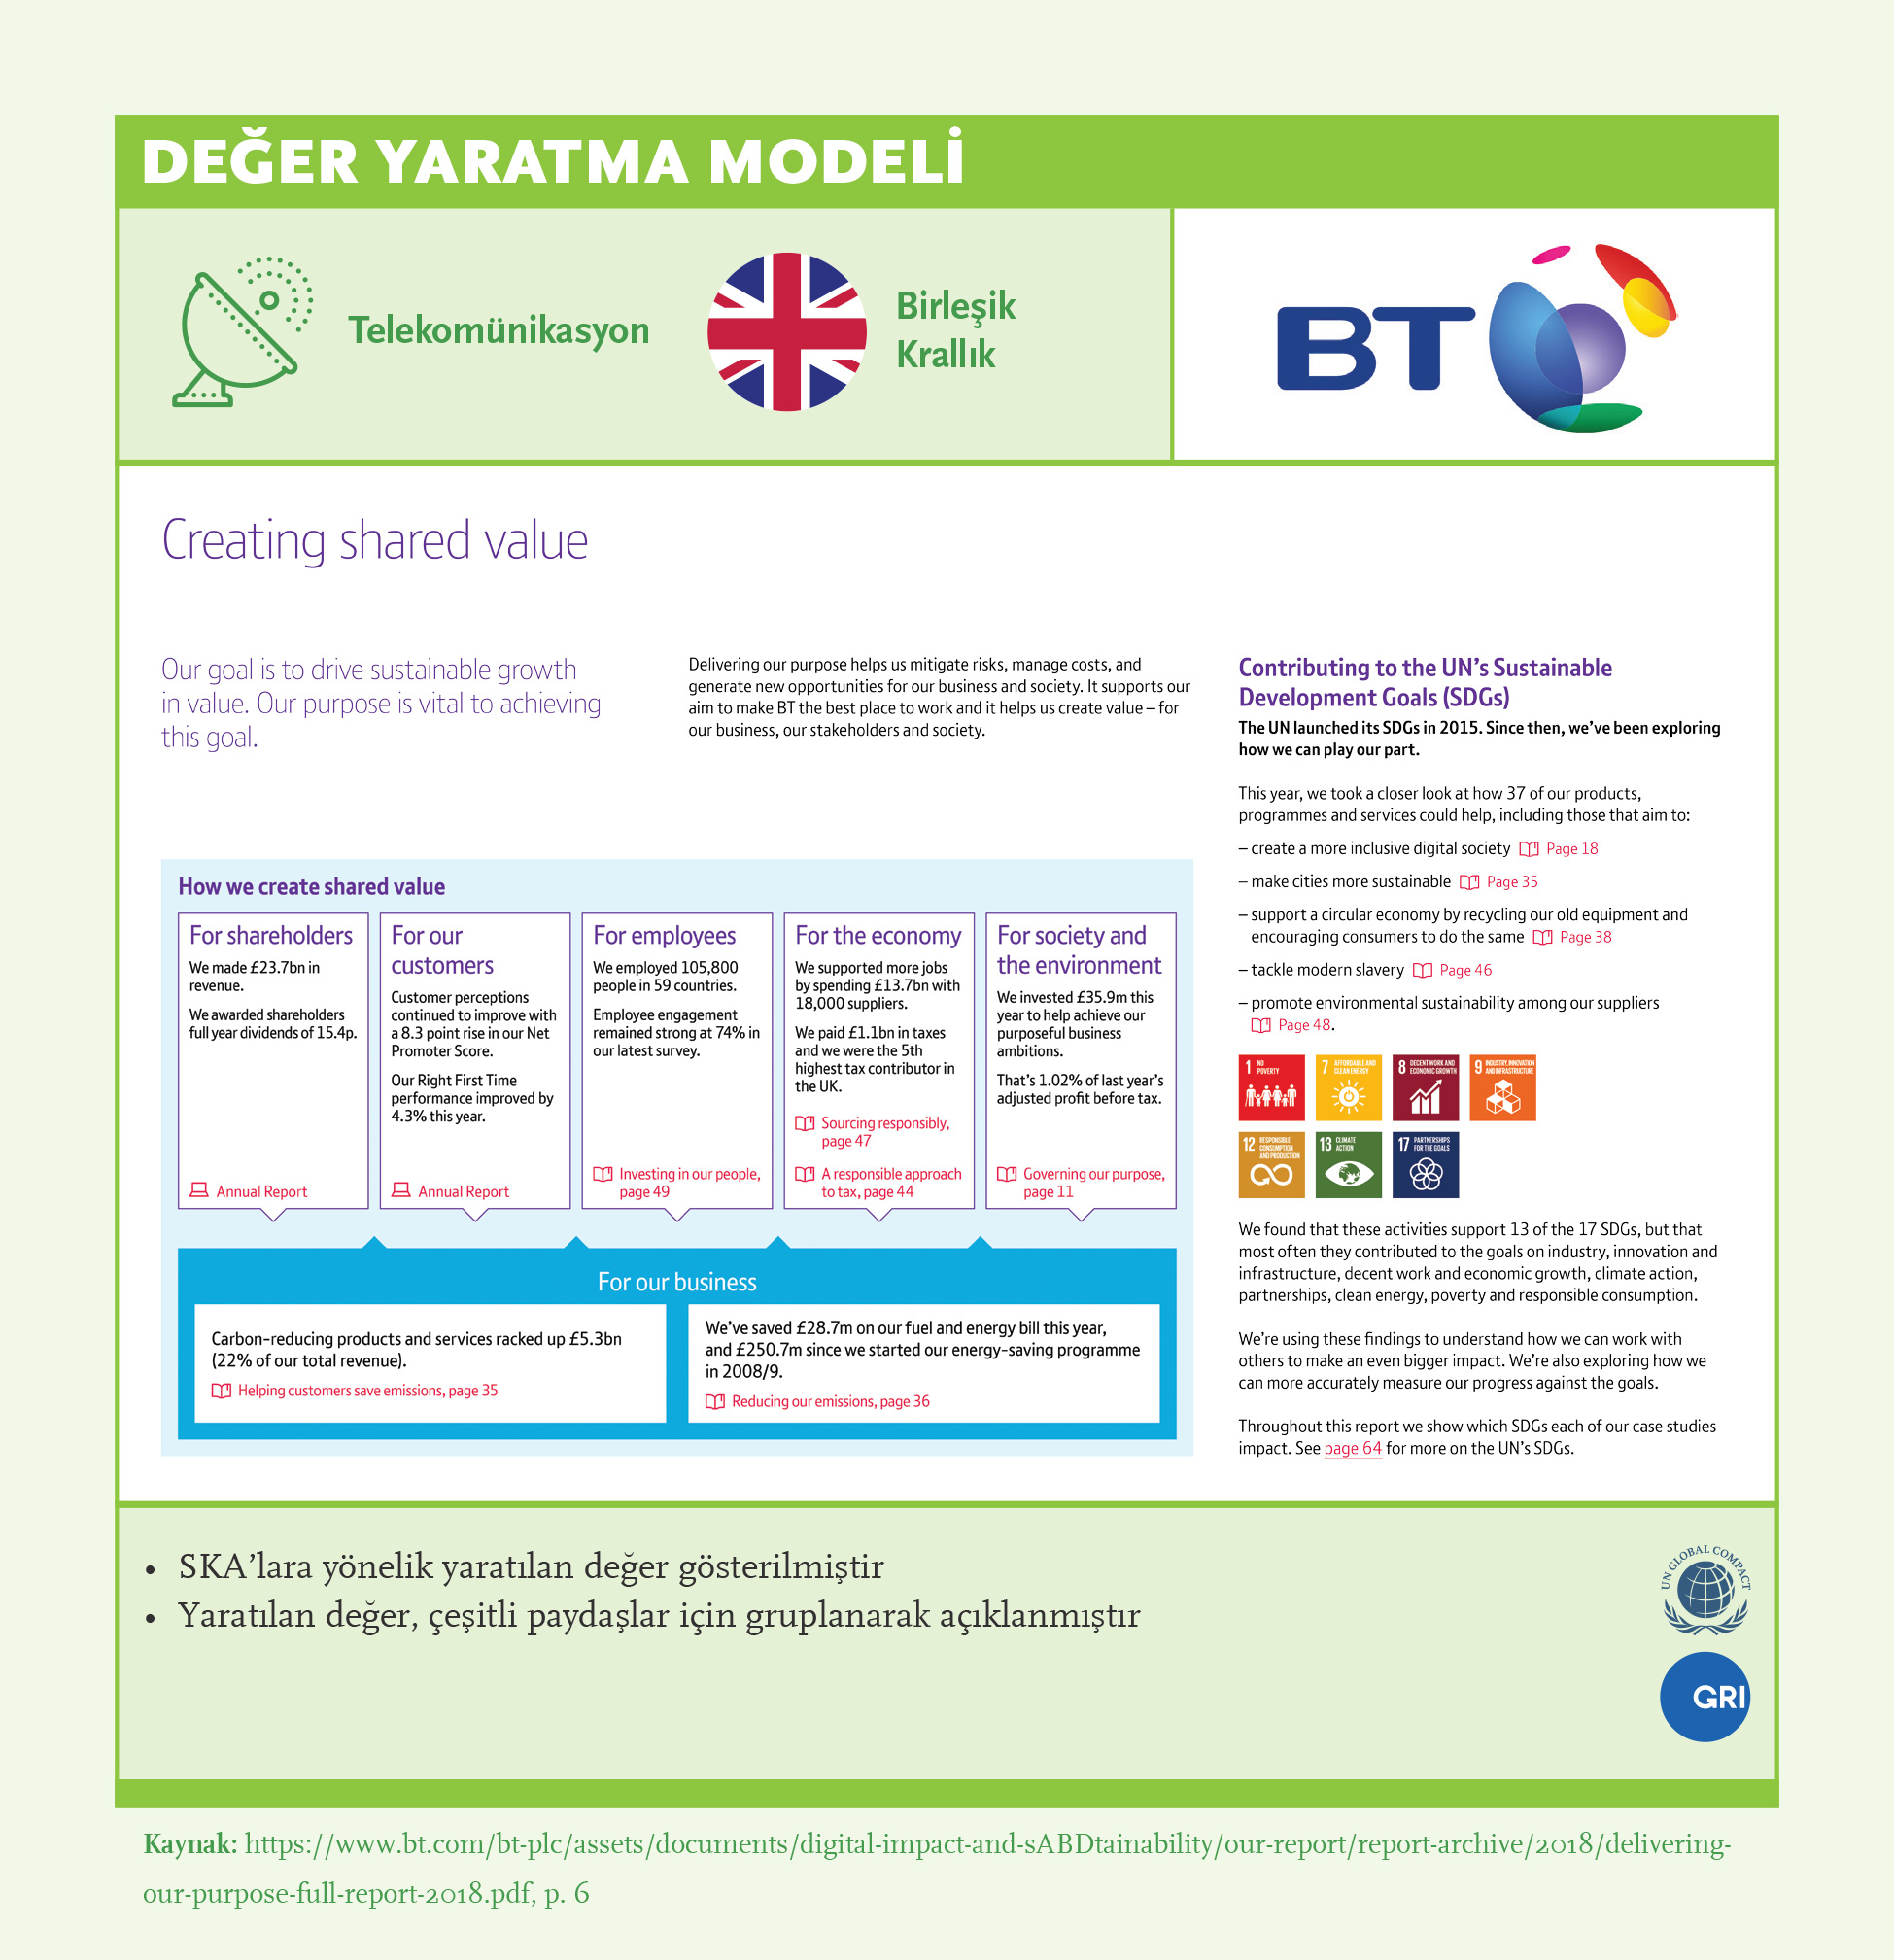 Değer Yaratma Modeli: British Telecom